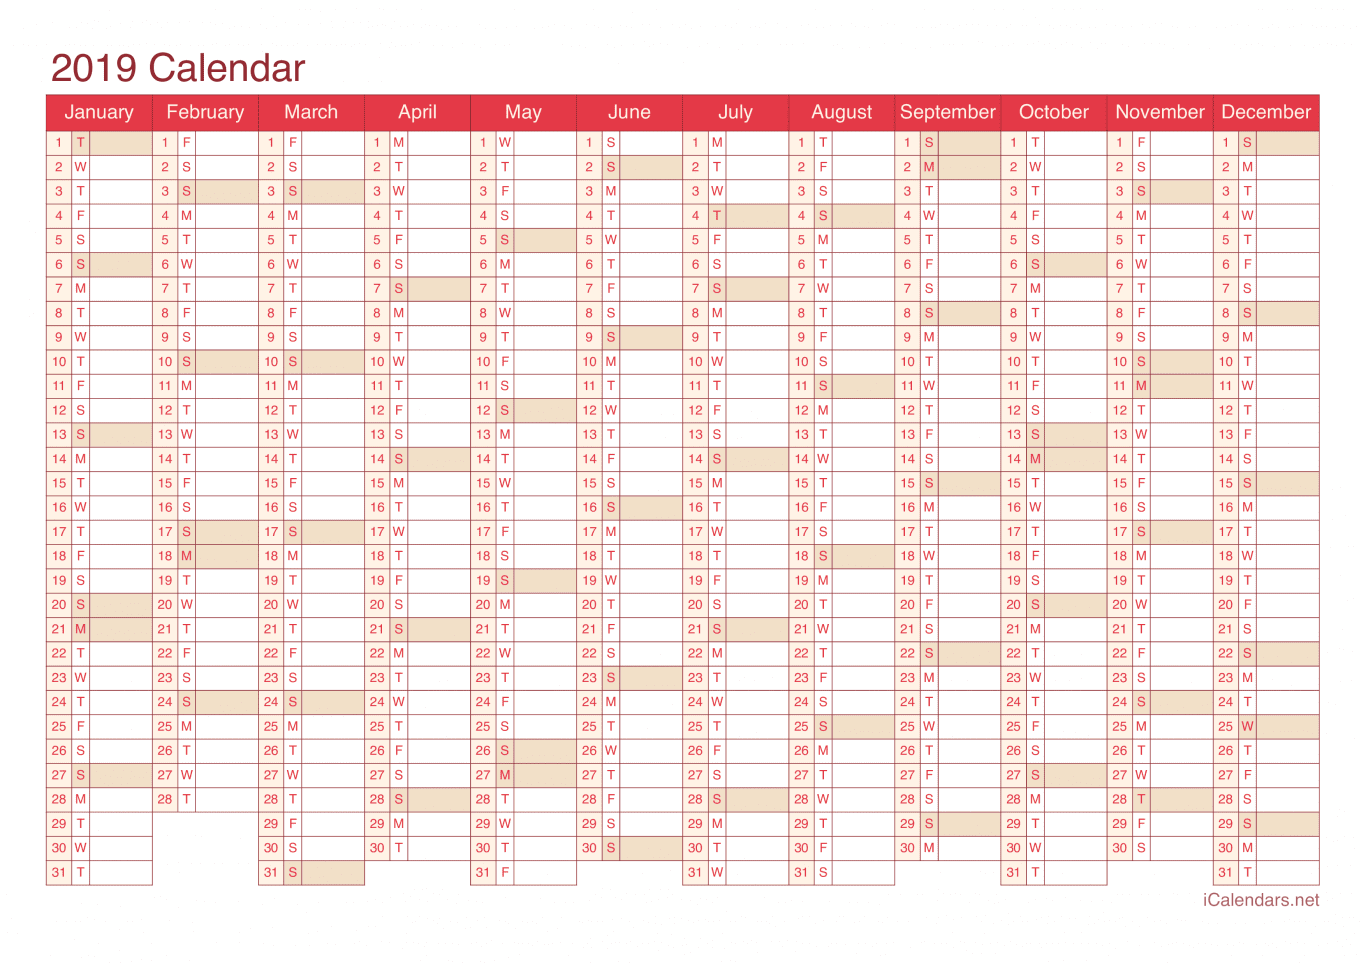 2019 Calendar - Cherry